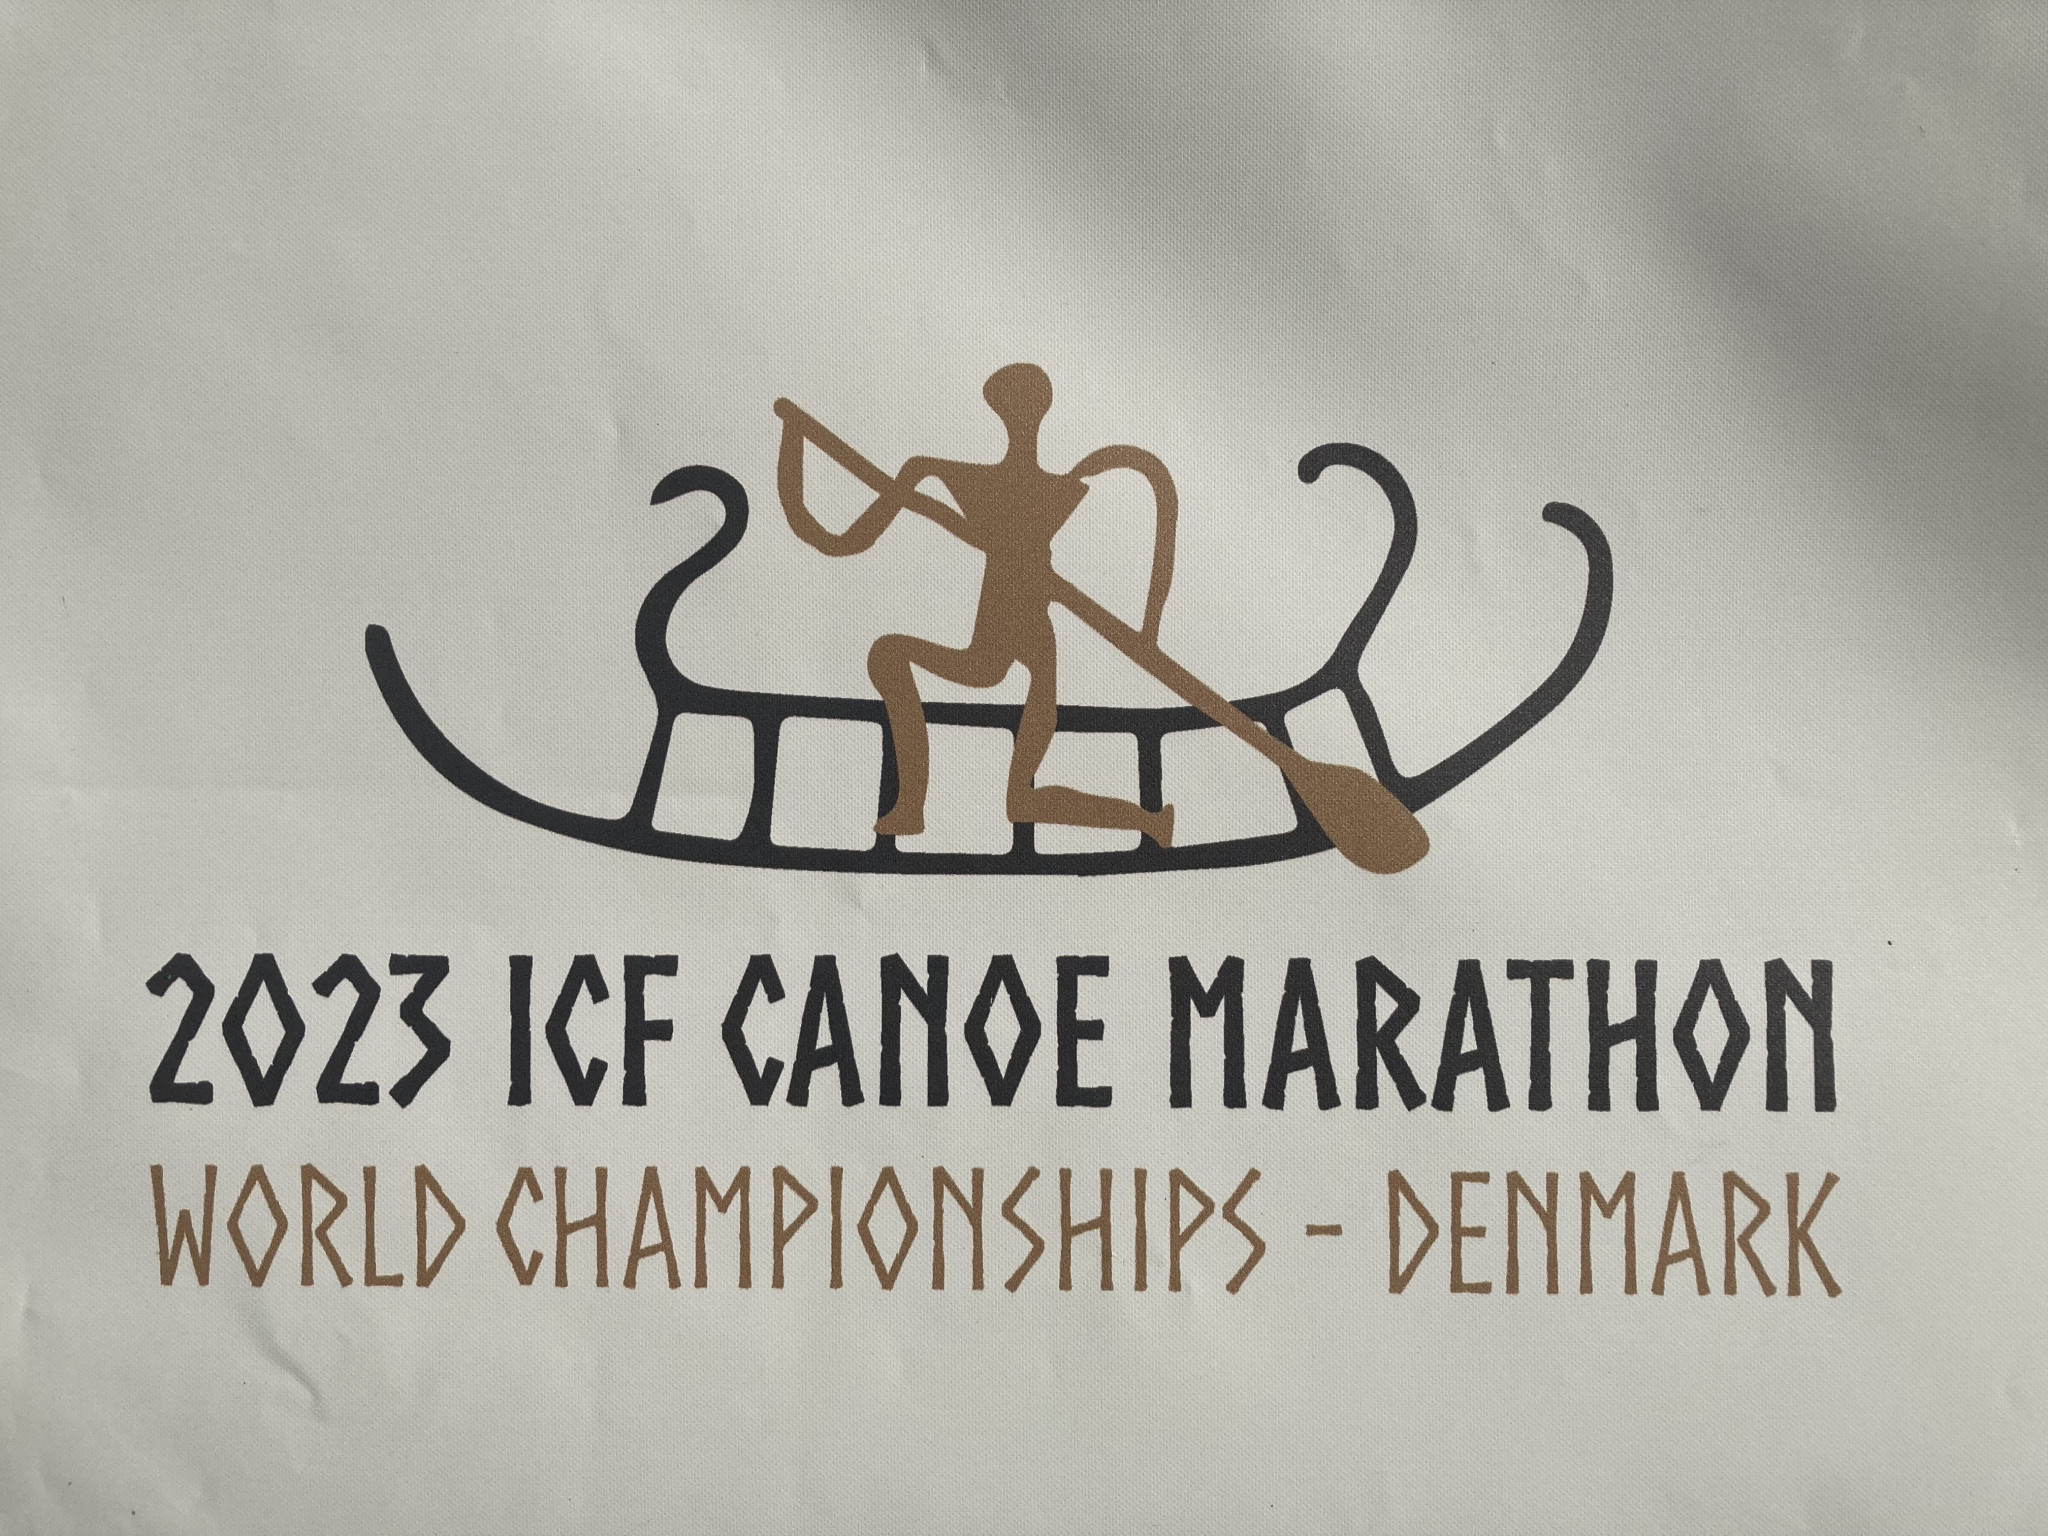 Russia no-show at ICF Canoe Marathon World Championships due to "secureness", says Danish chief